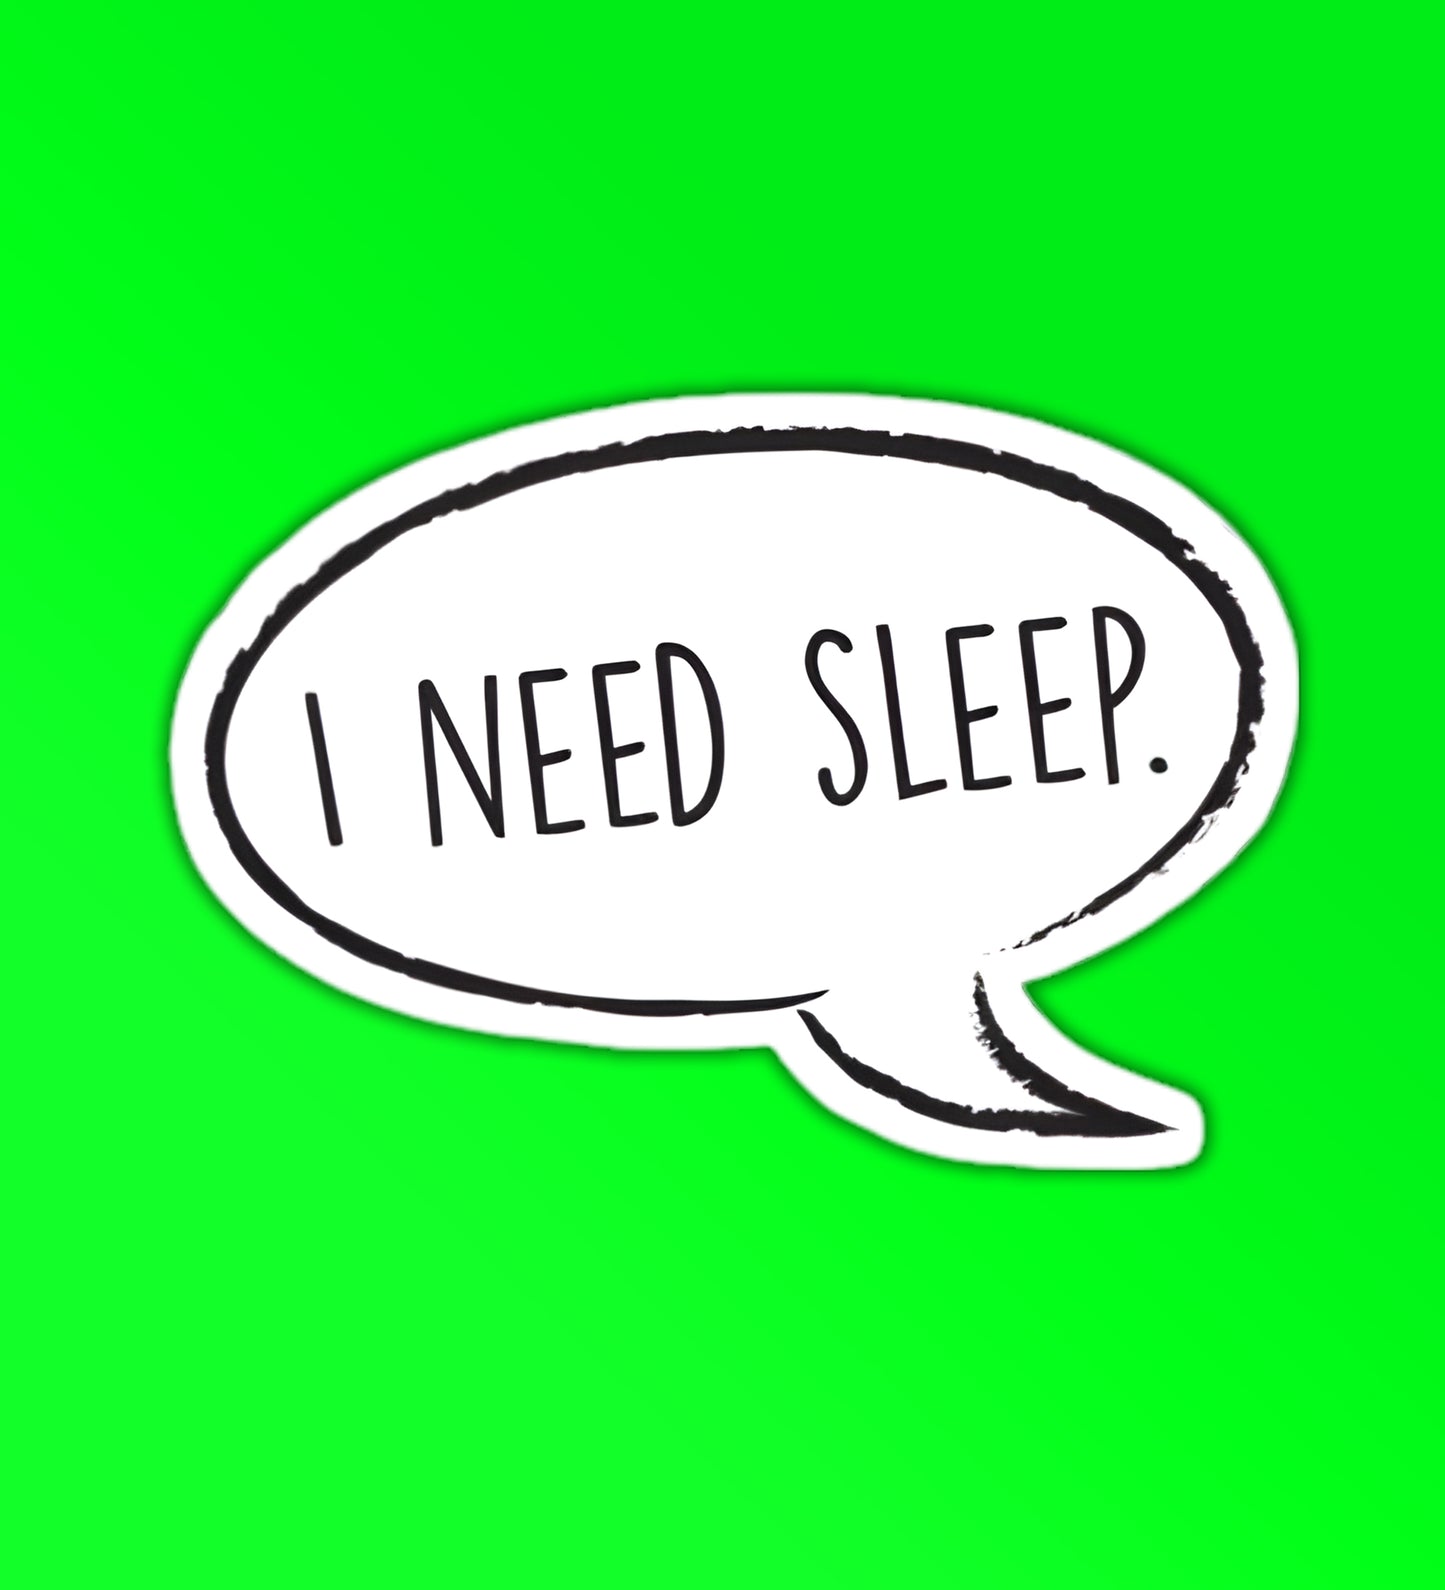 I Need Sleep Sticker